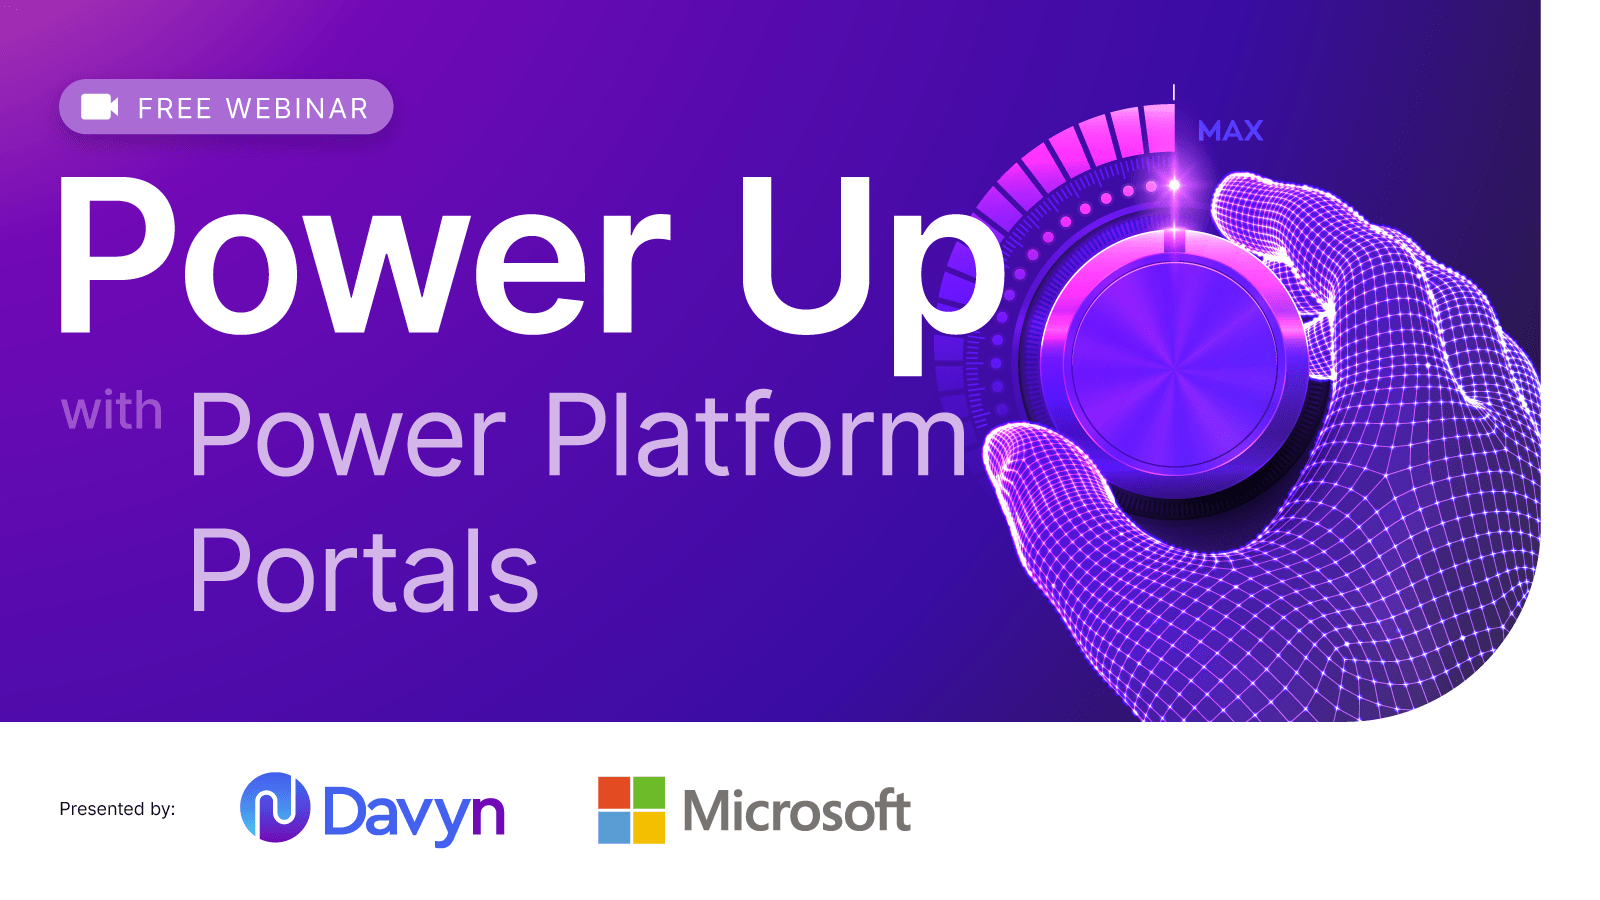 Power Up with Power Platform Portals